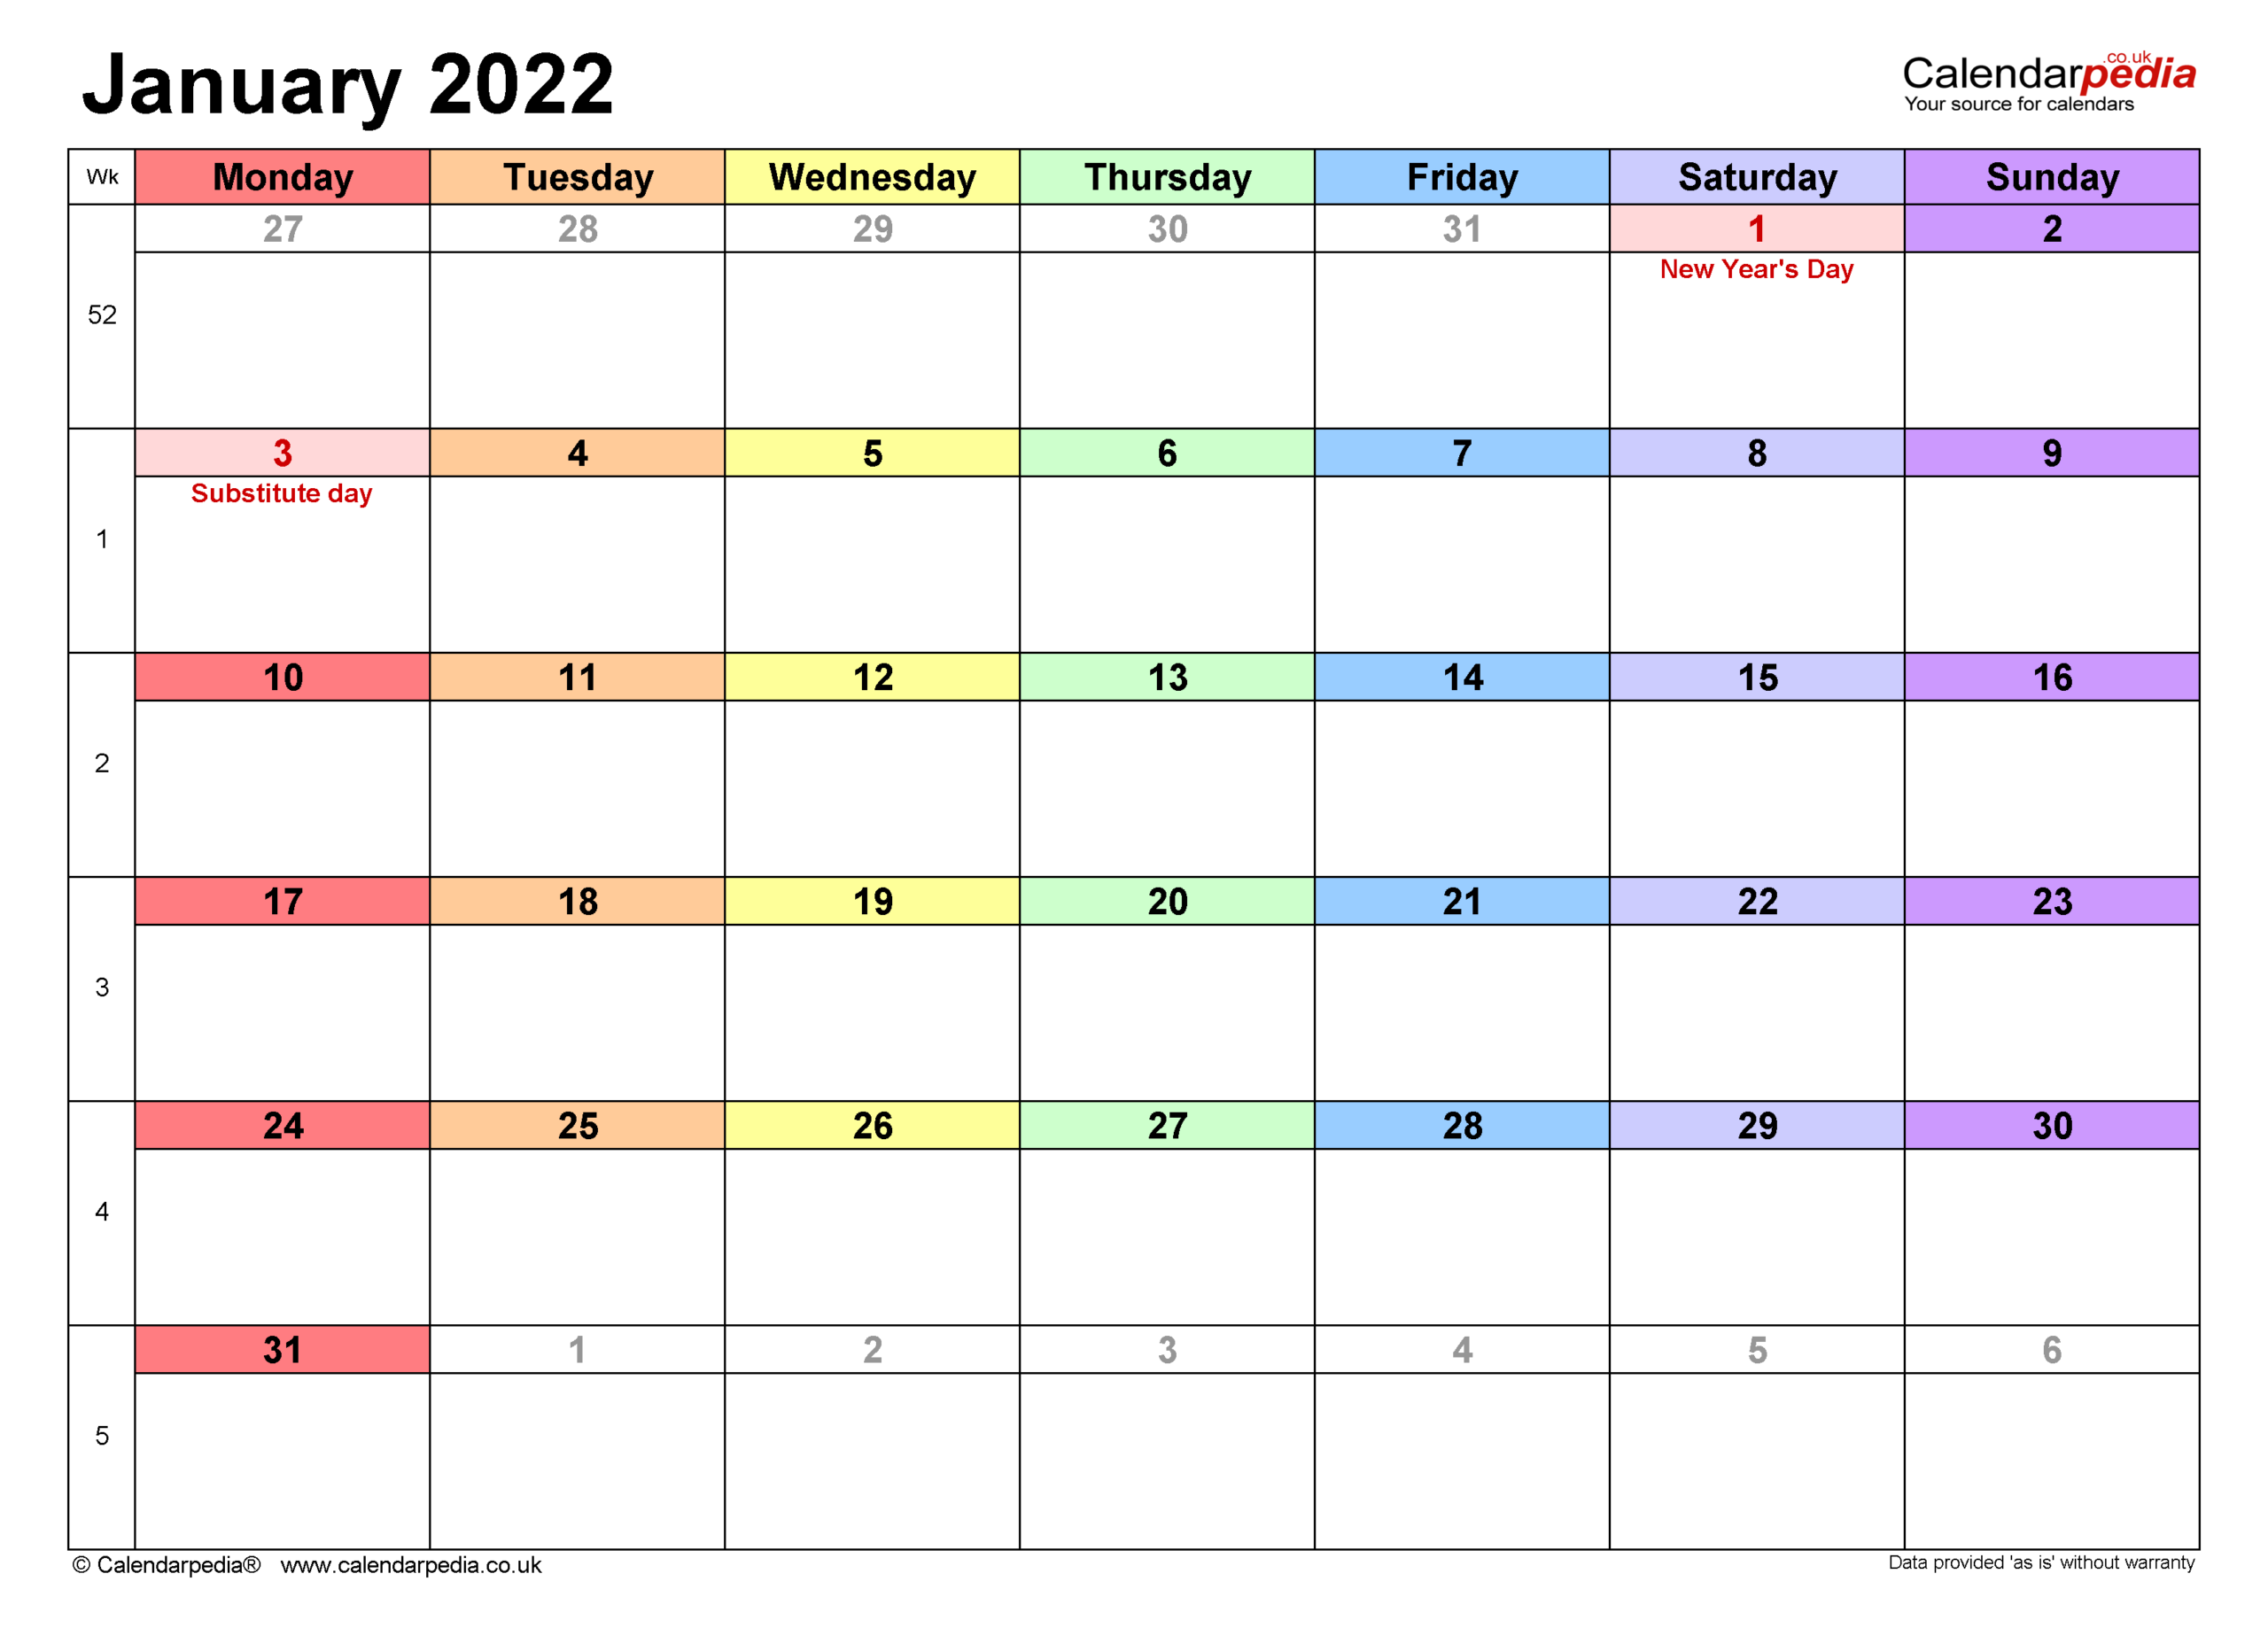 Get Calendar To Print January 2022